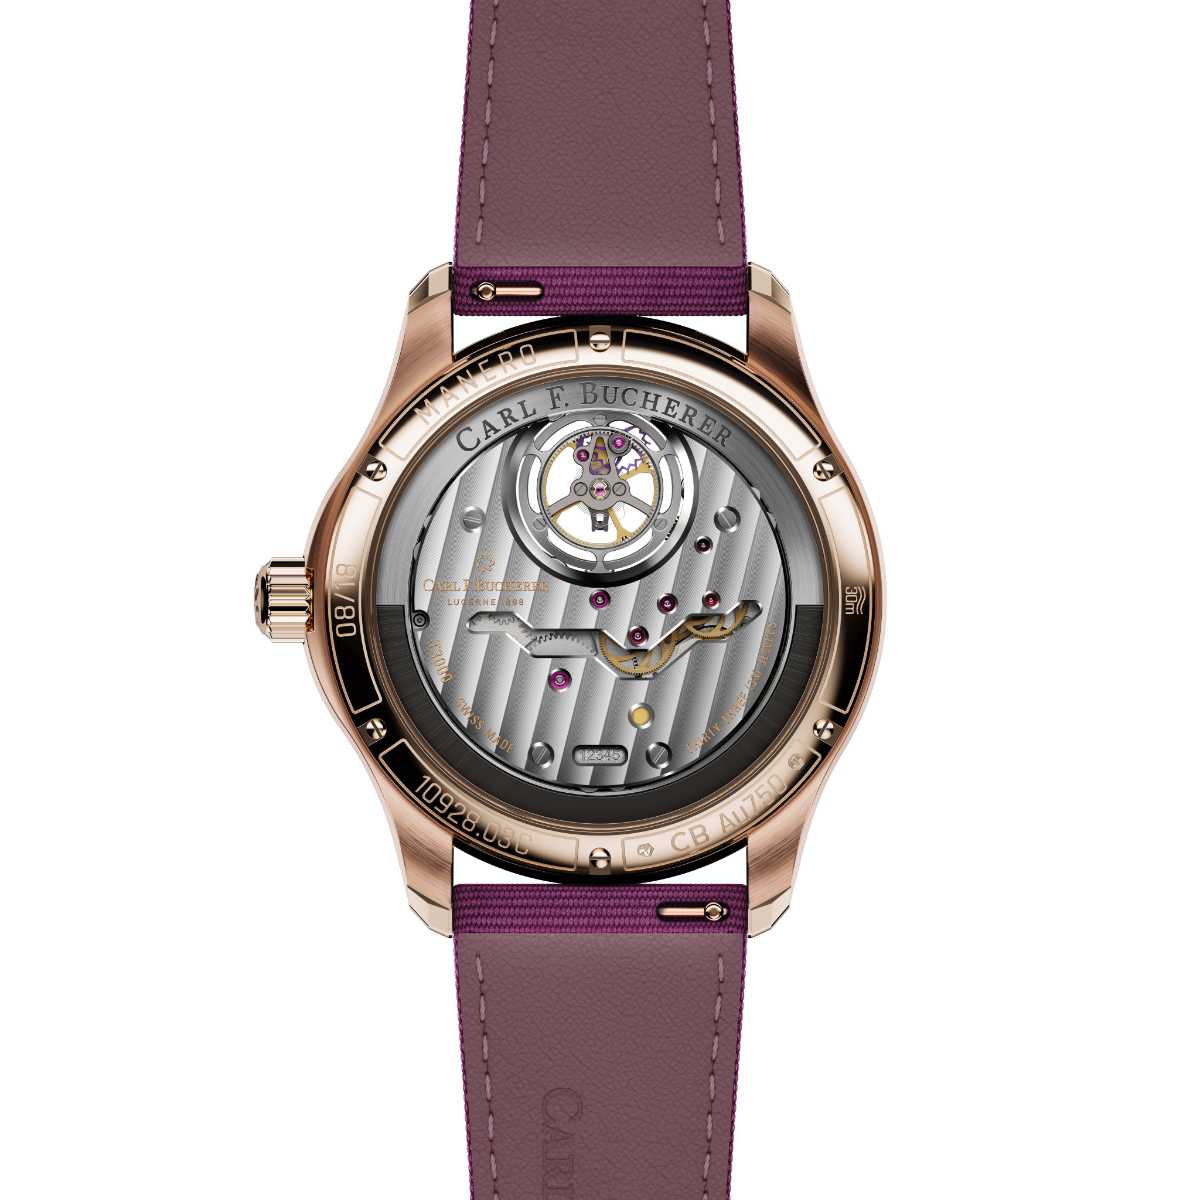 Carl F. Bucherer Presents New Three Limited-Edition Manero Tourbillon Double Peripheral Timepieces